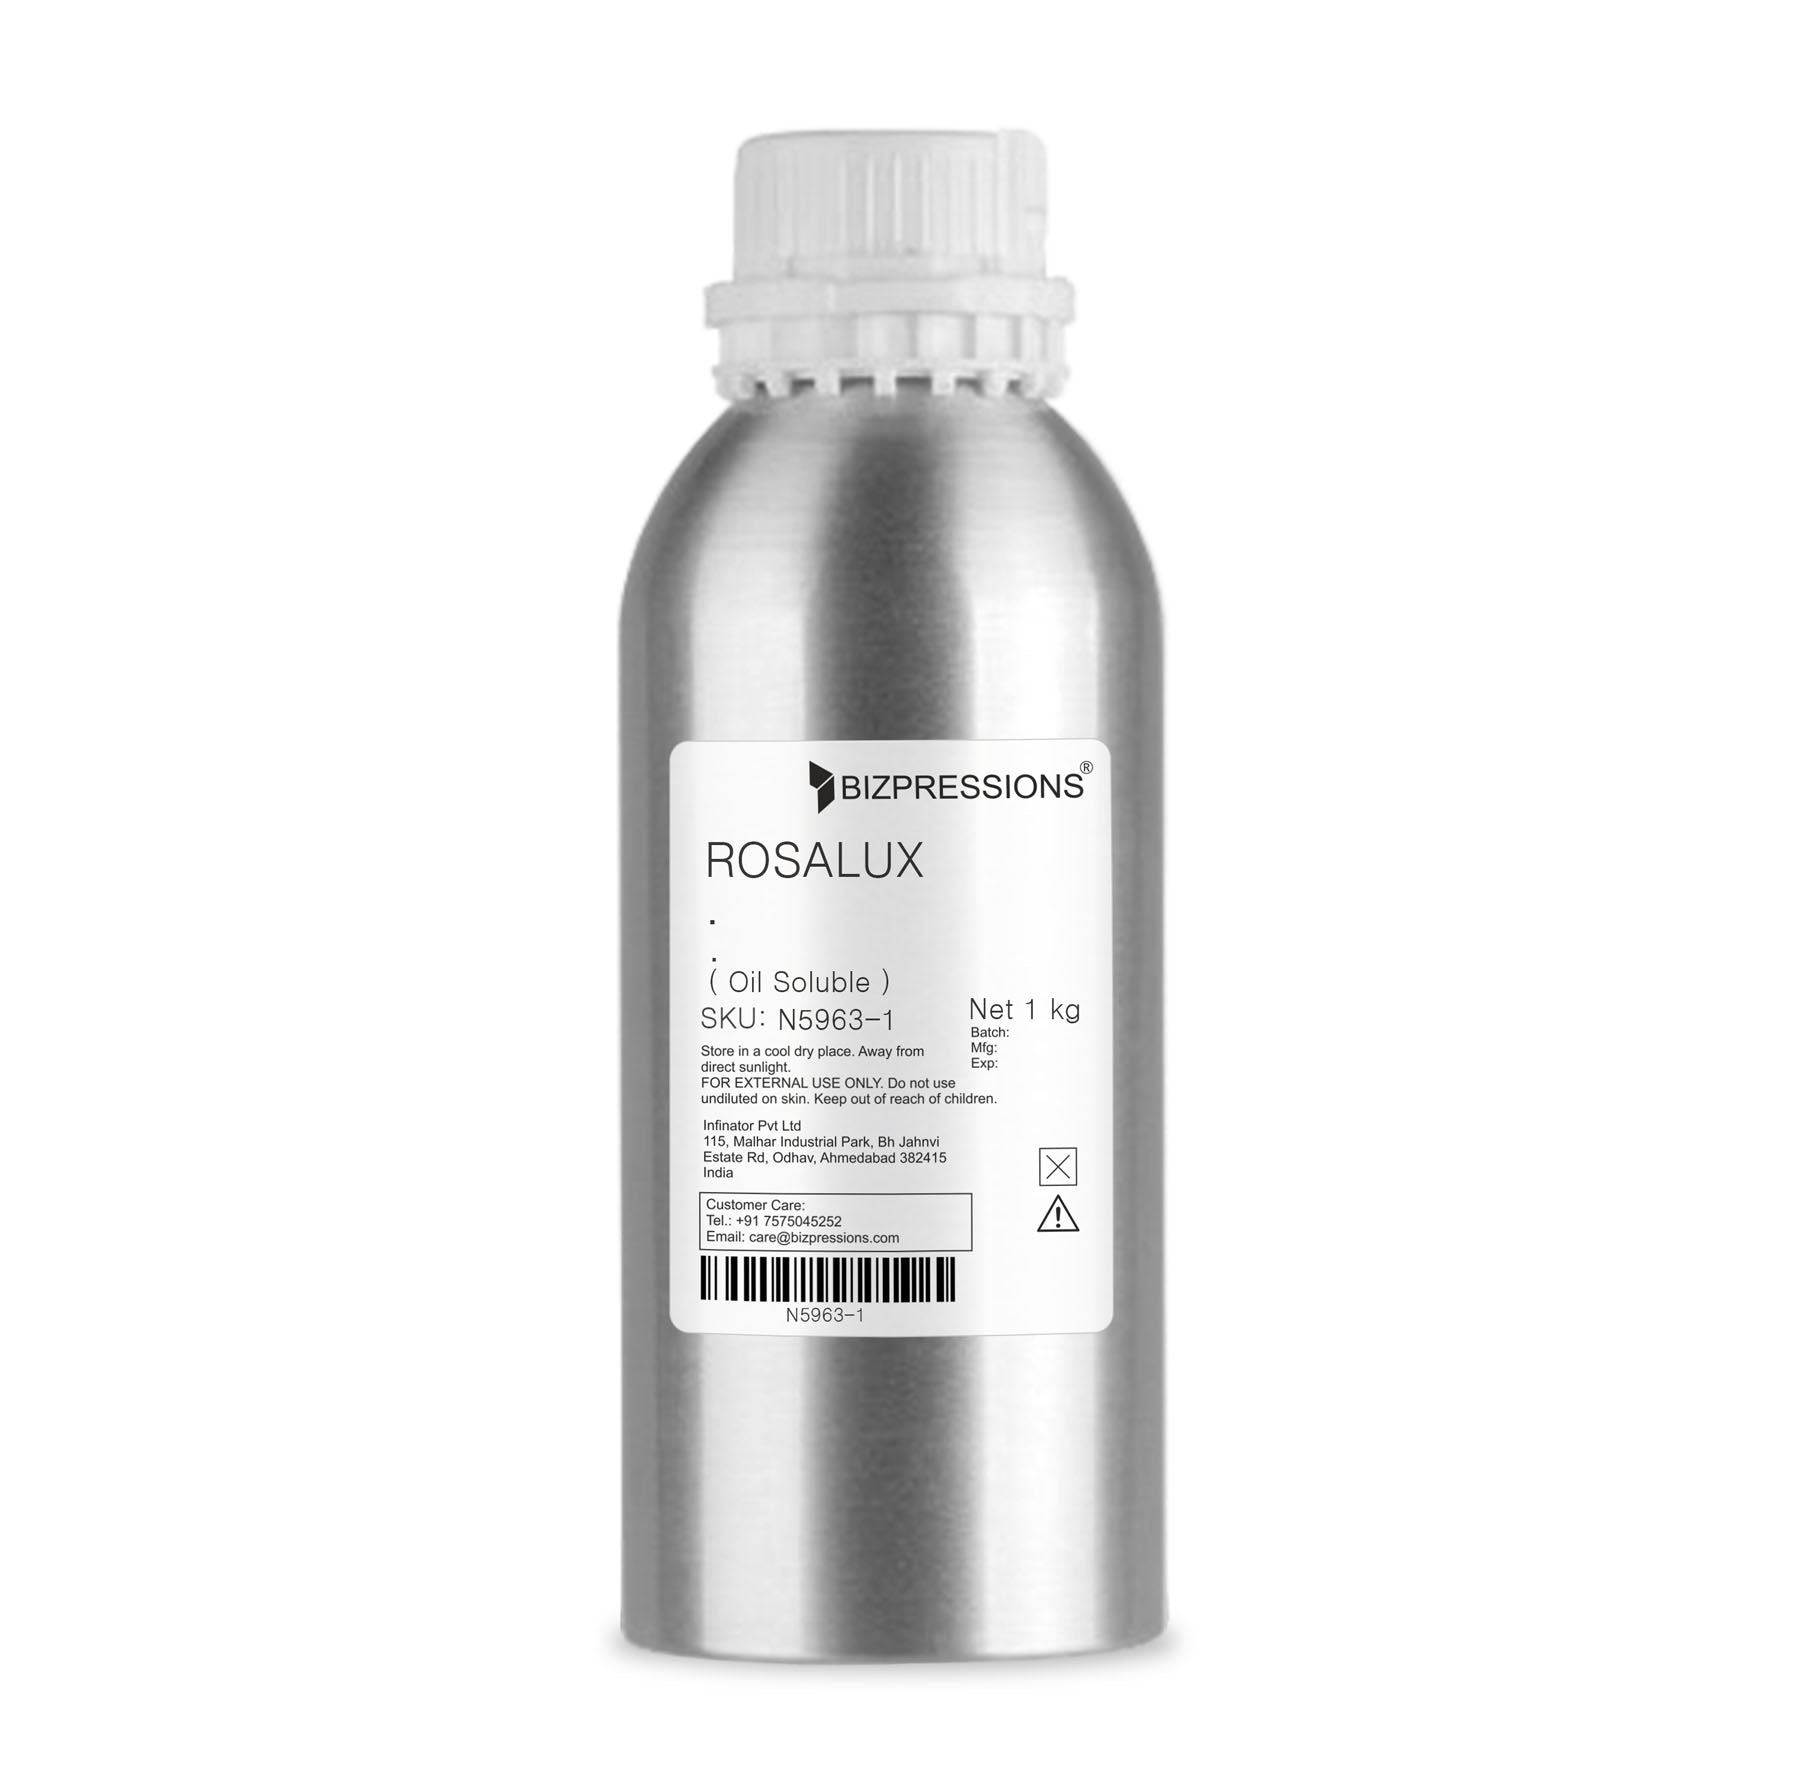 ROSALUX - Fragrance ( Oil Soluble ) - 1 kg